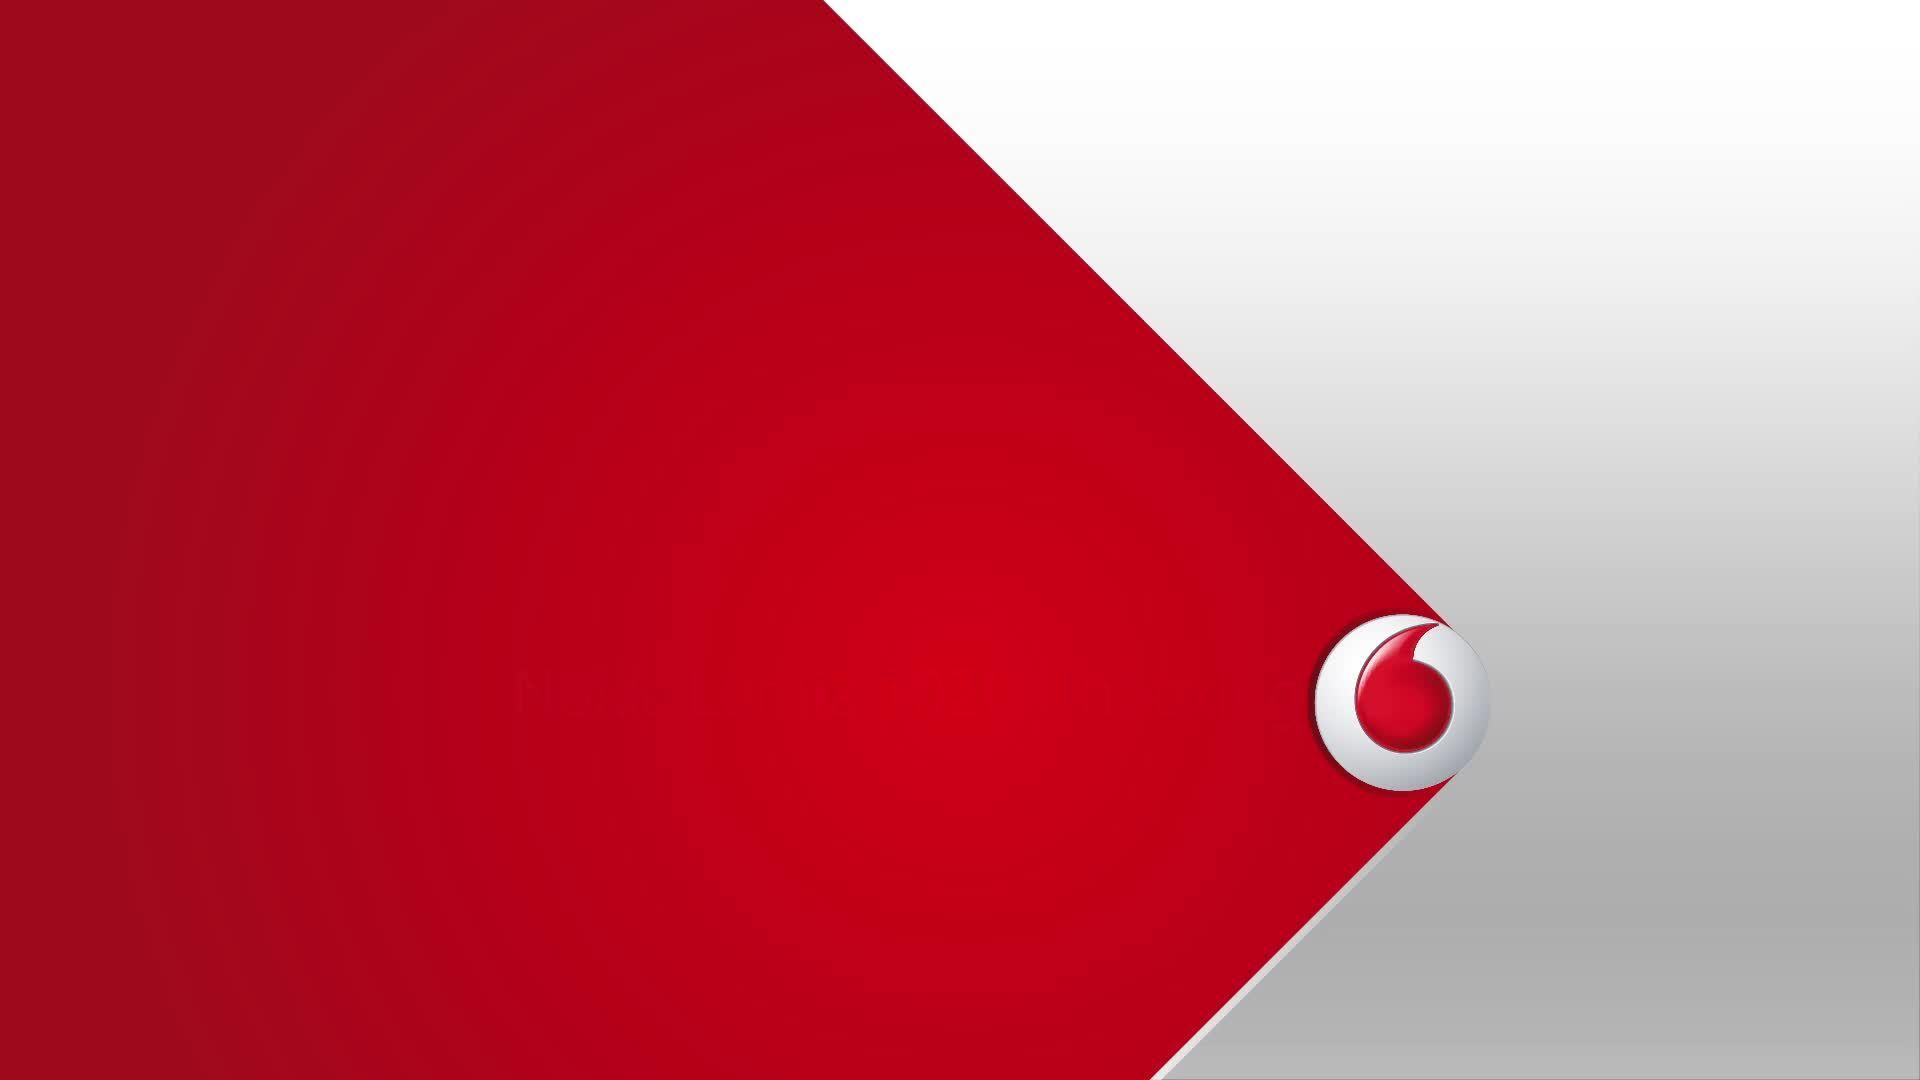 Vodafone Blackberry Wallpaper image information